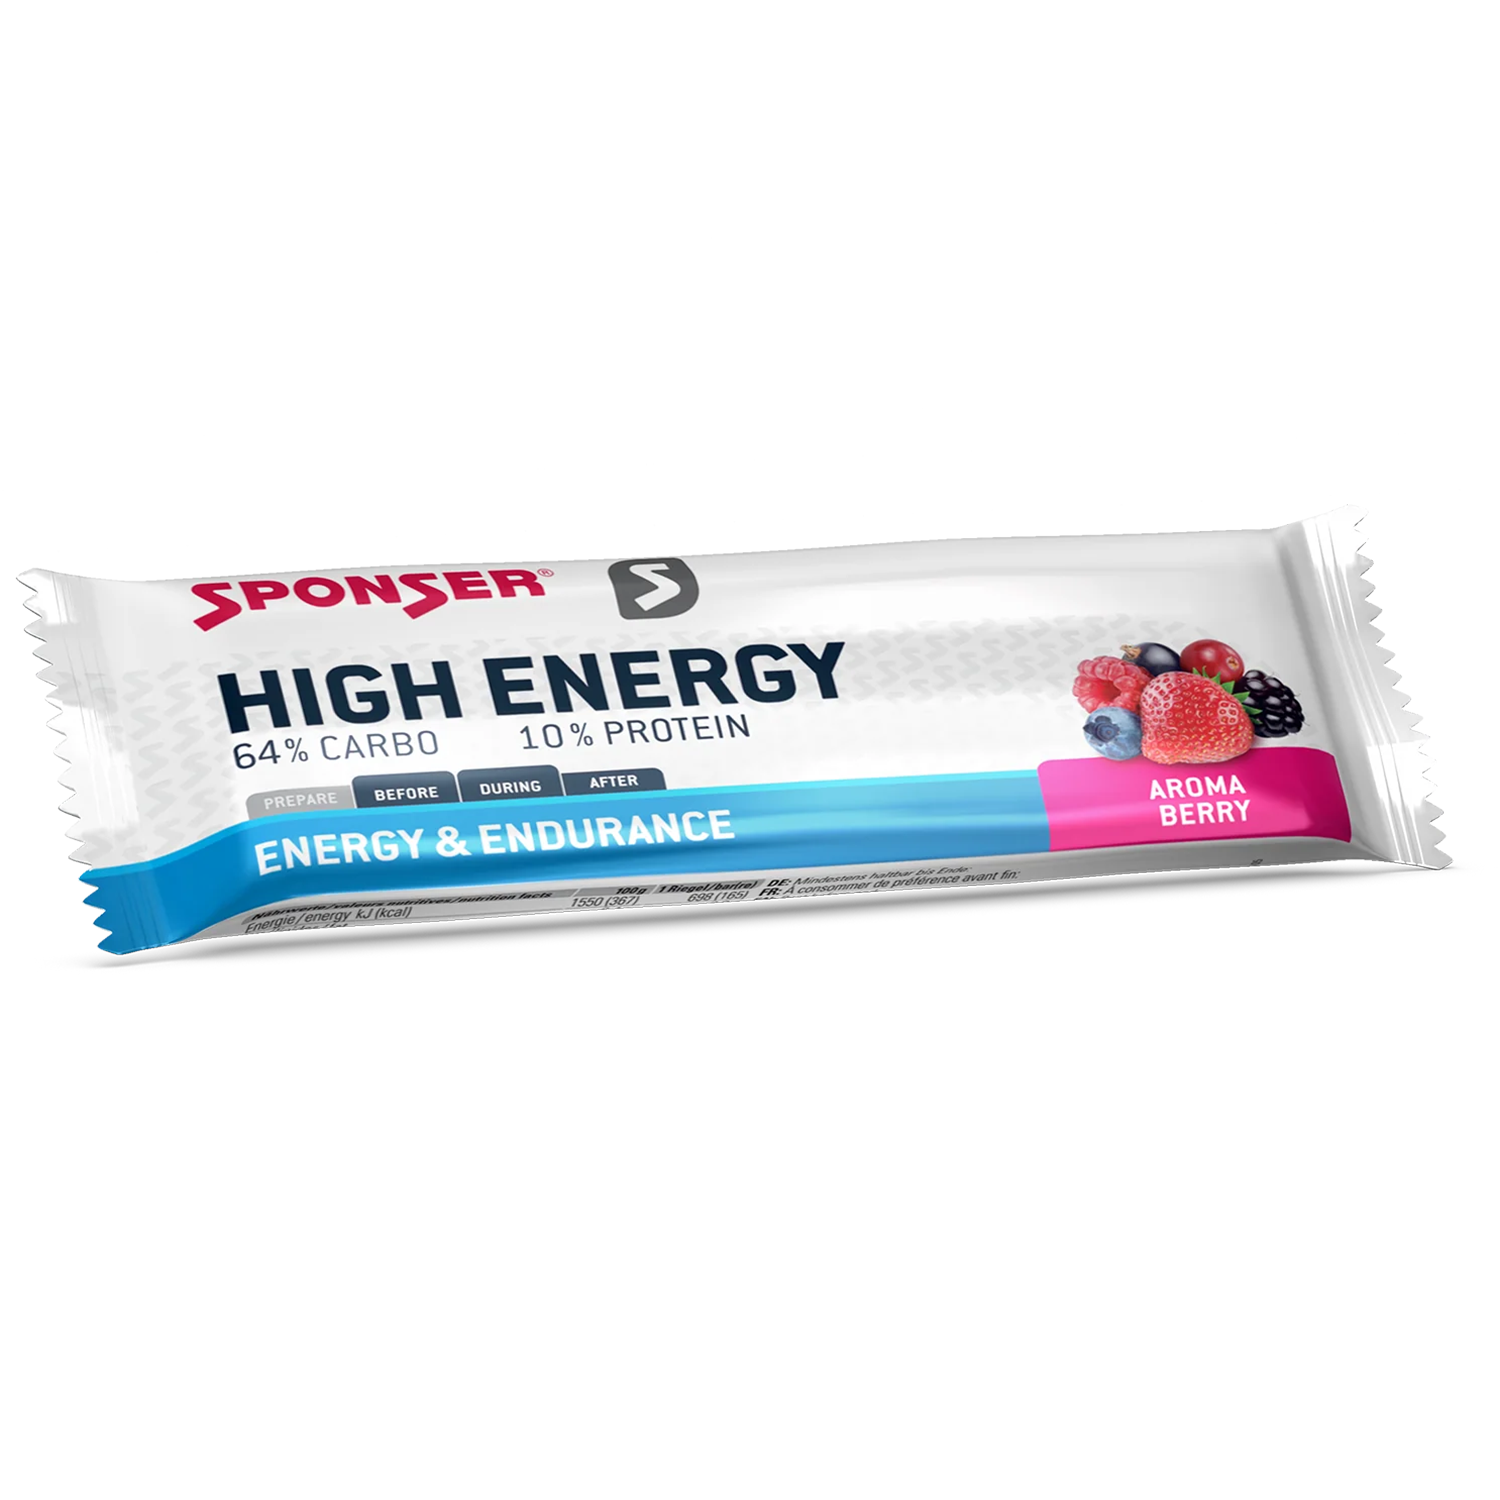 Sponser high energy